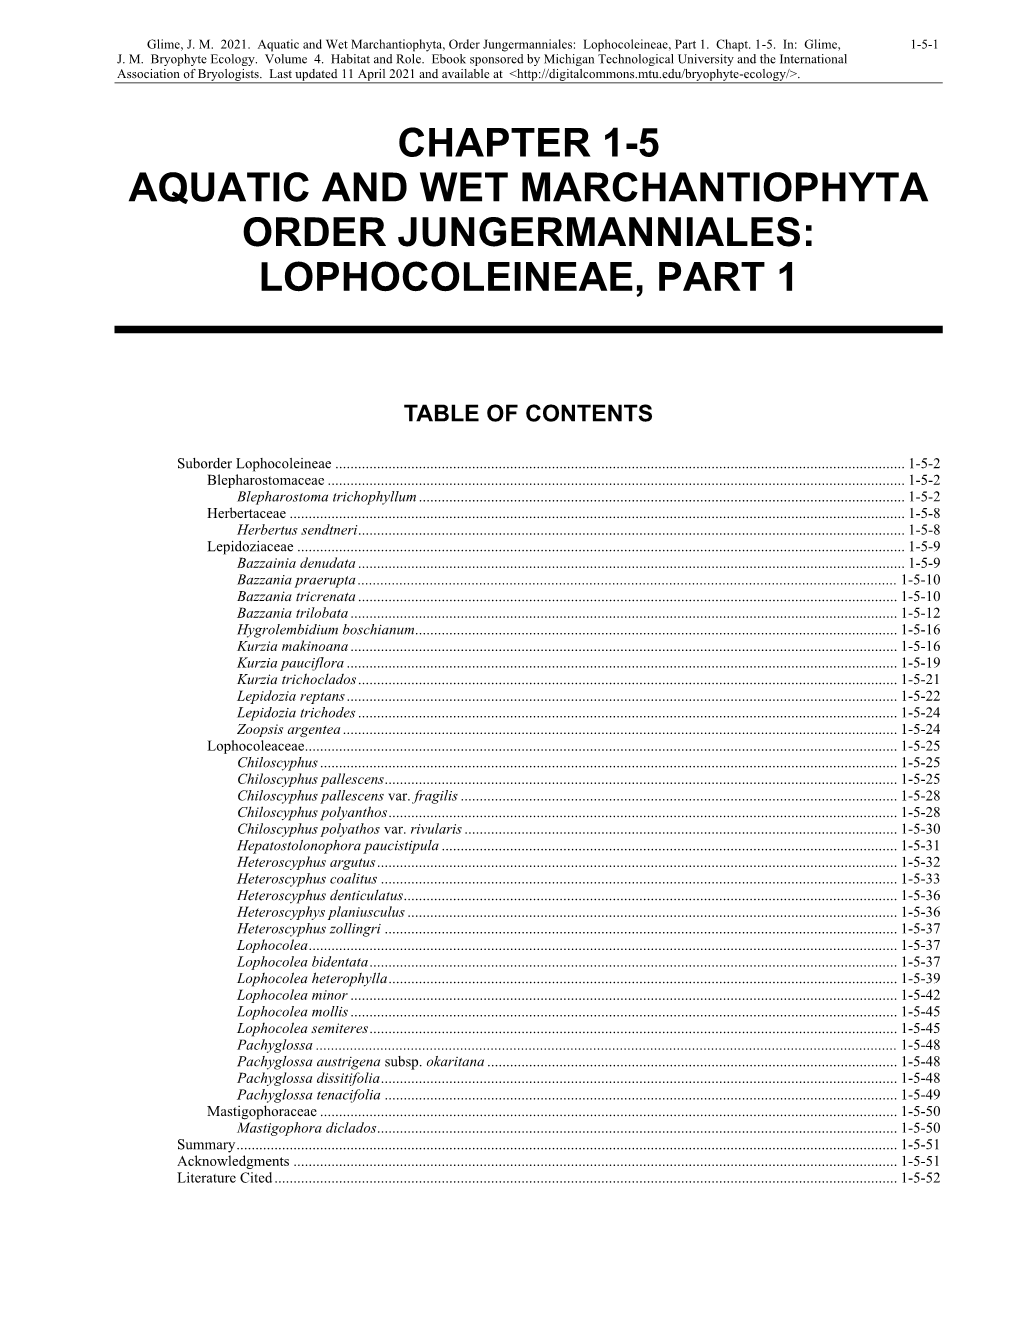 Aquatic and Wet Marchantiophyta Order Jungermanniales: Lophocoleineae, Part 1